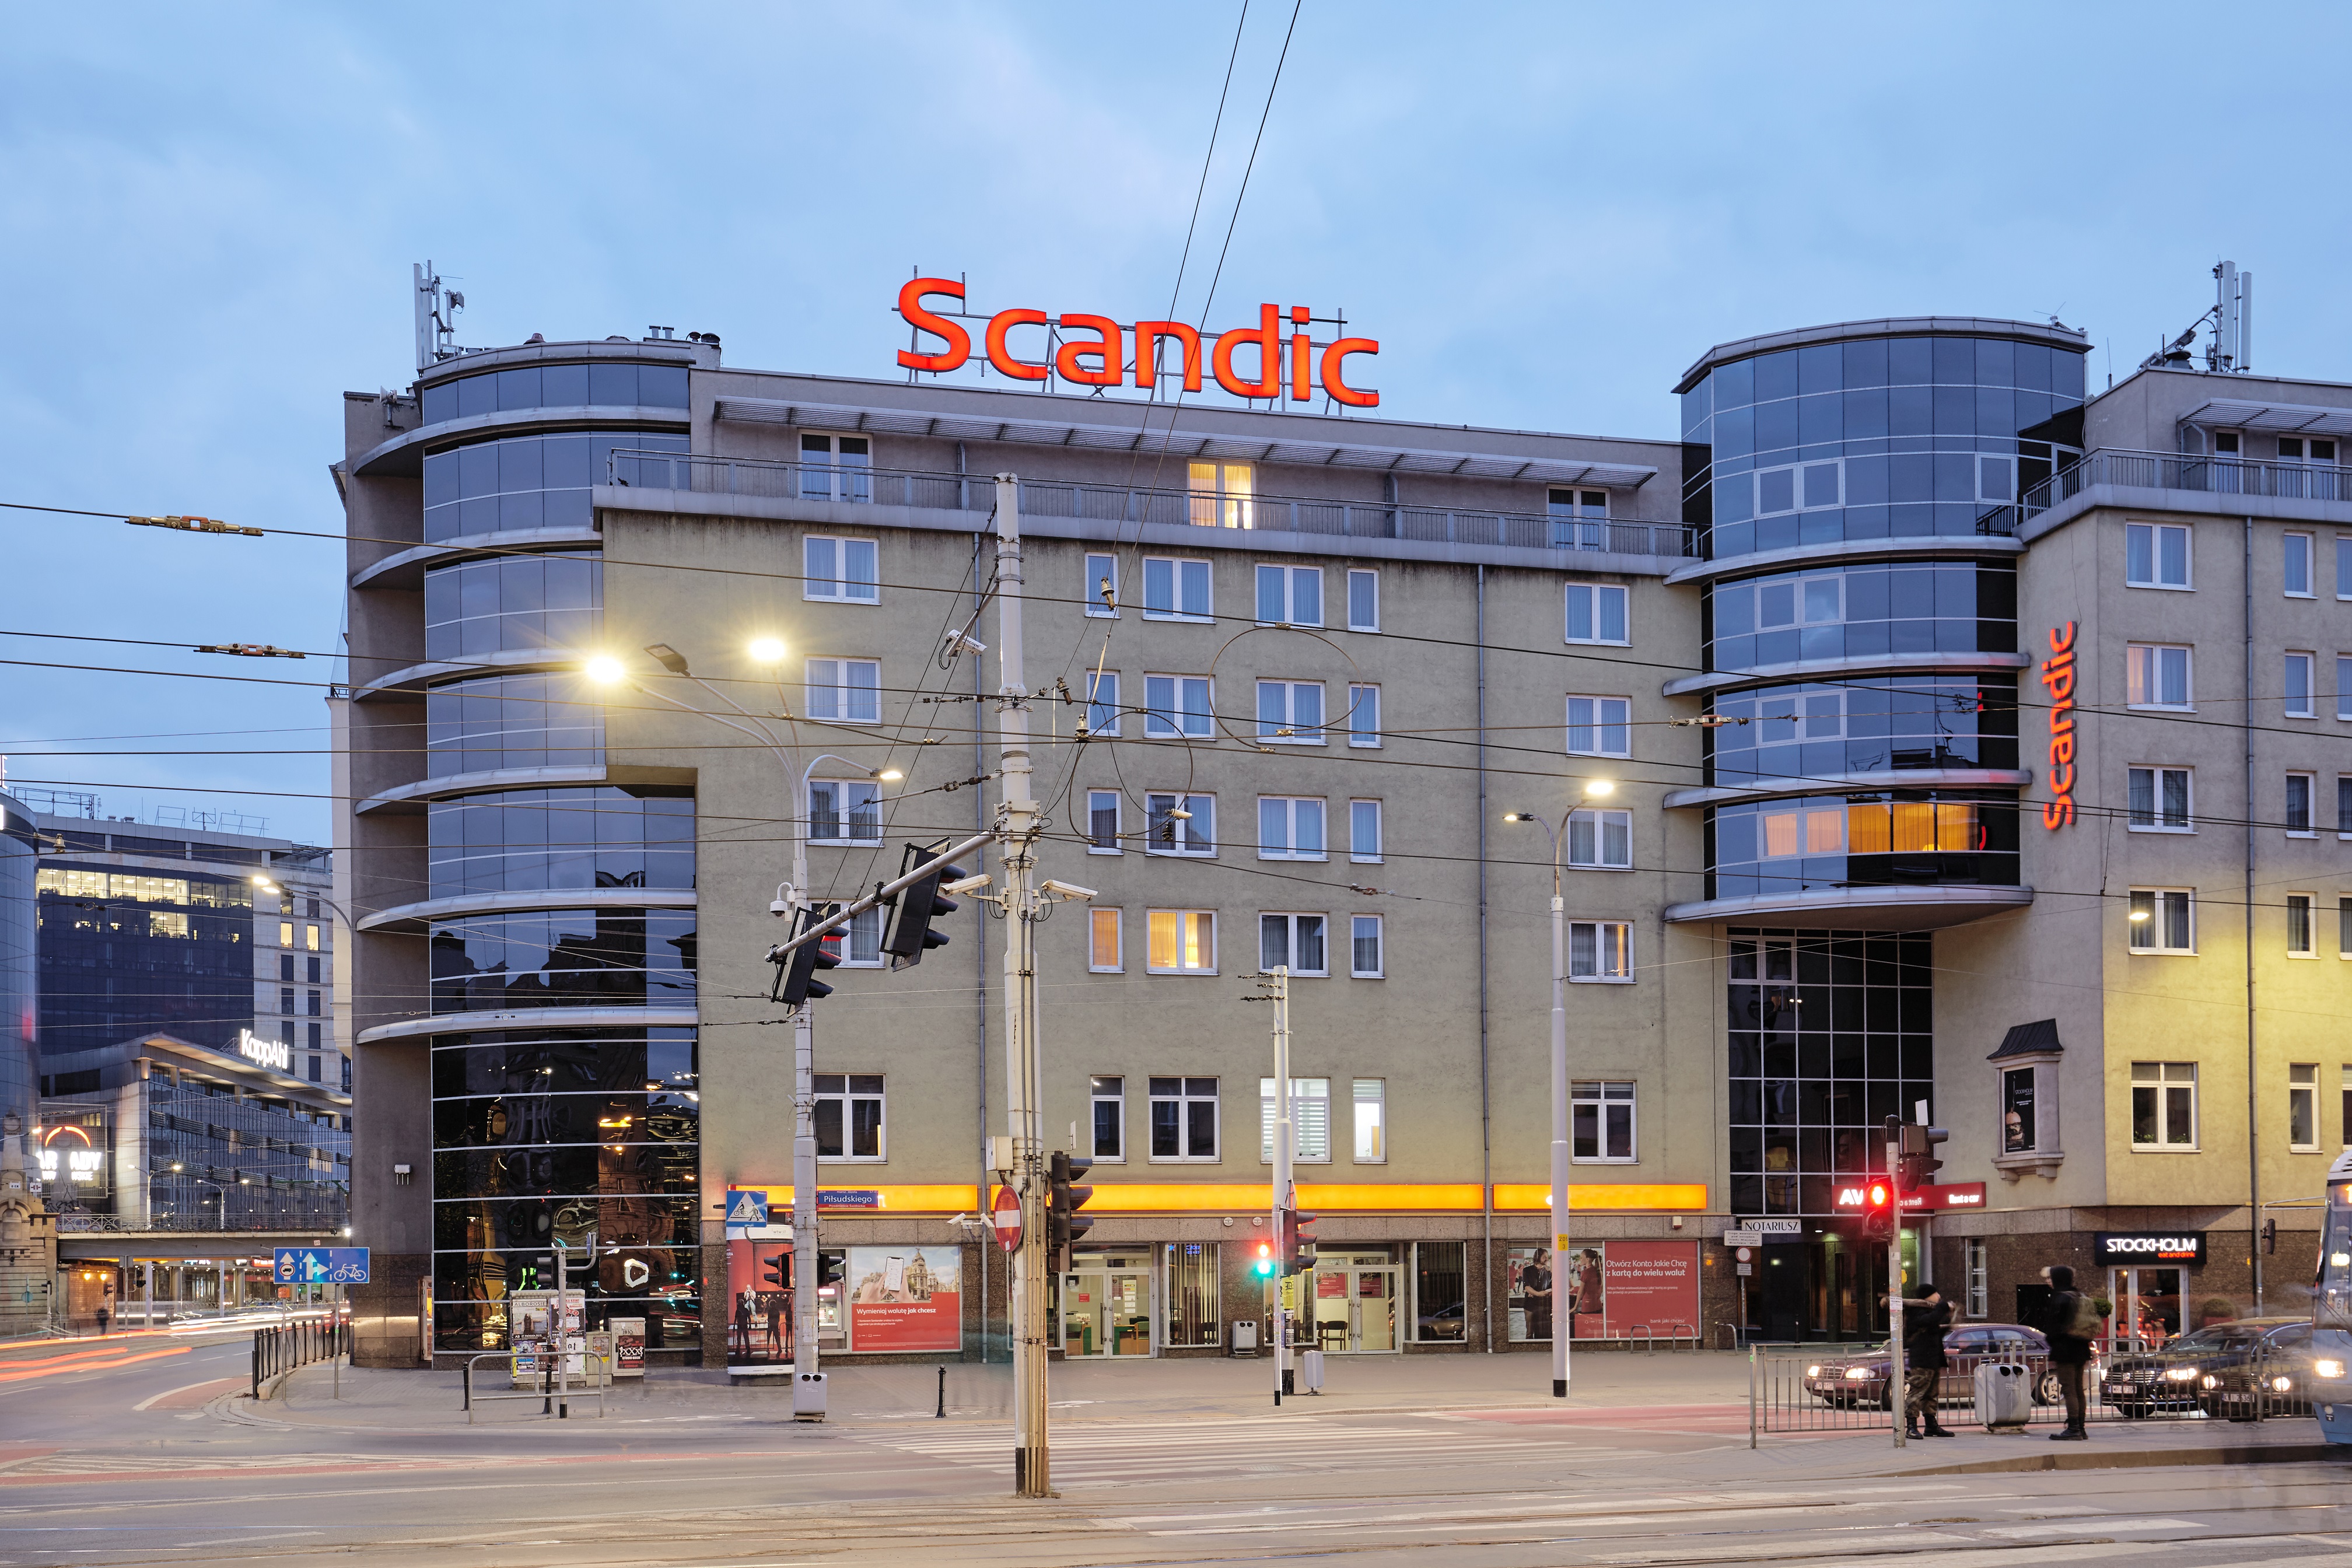 Scandic-Wroclaw-exterior-facade (1) - Copy